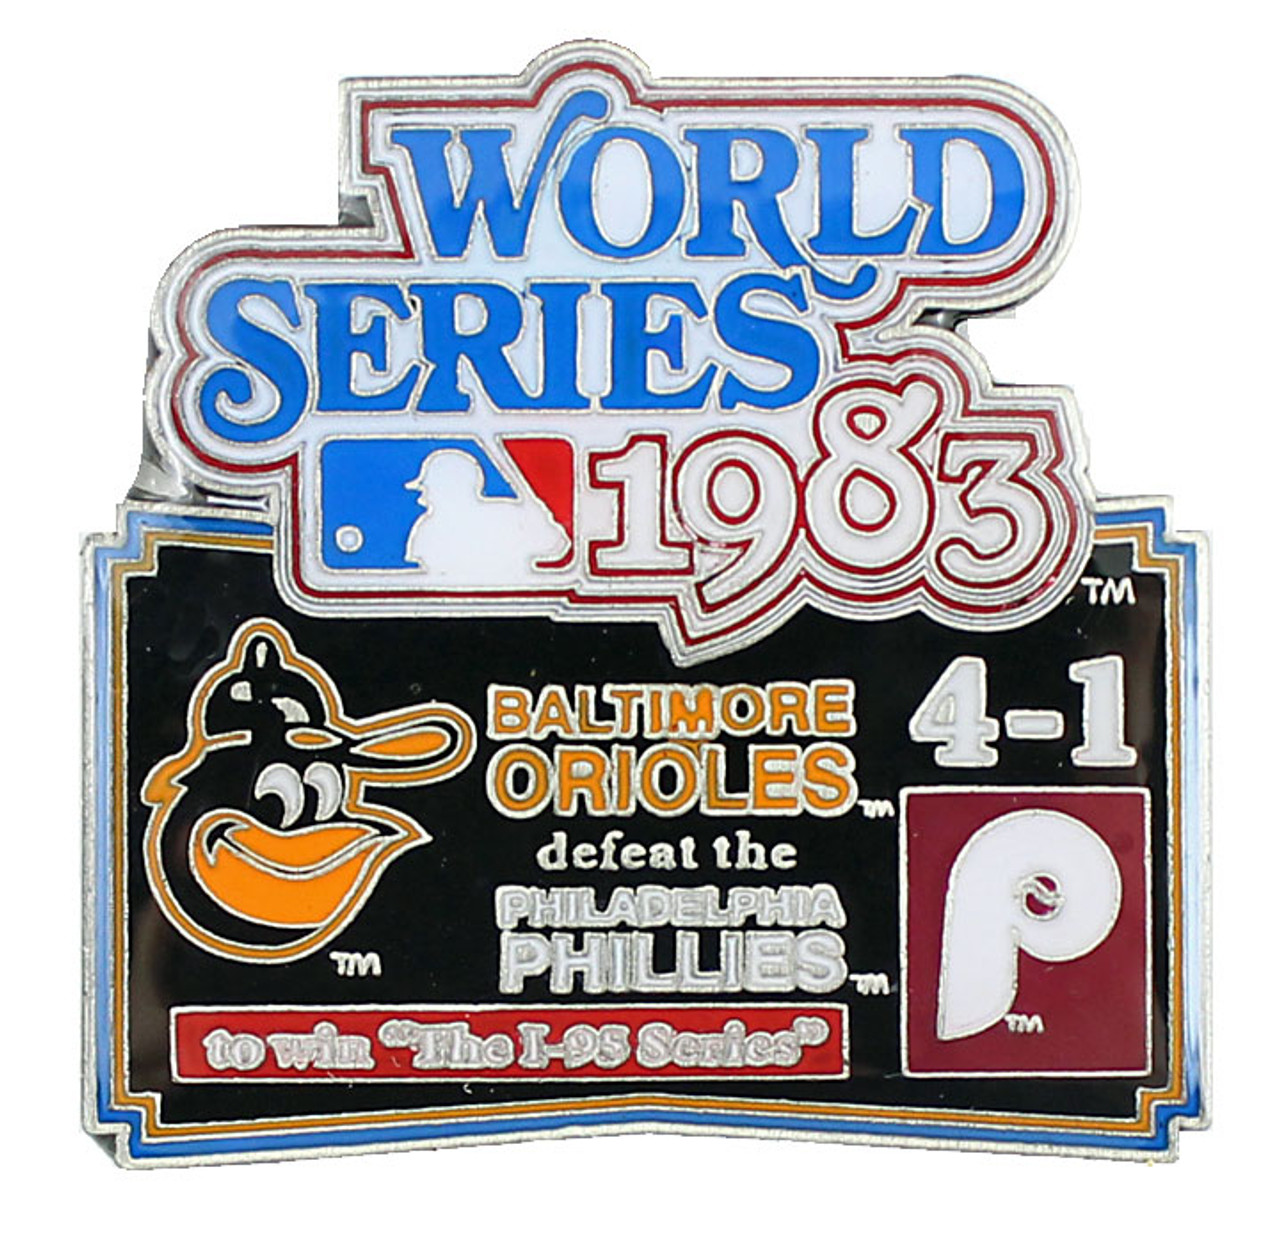 1983 world series